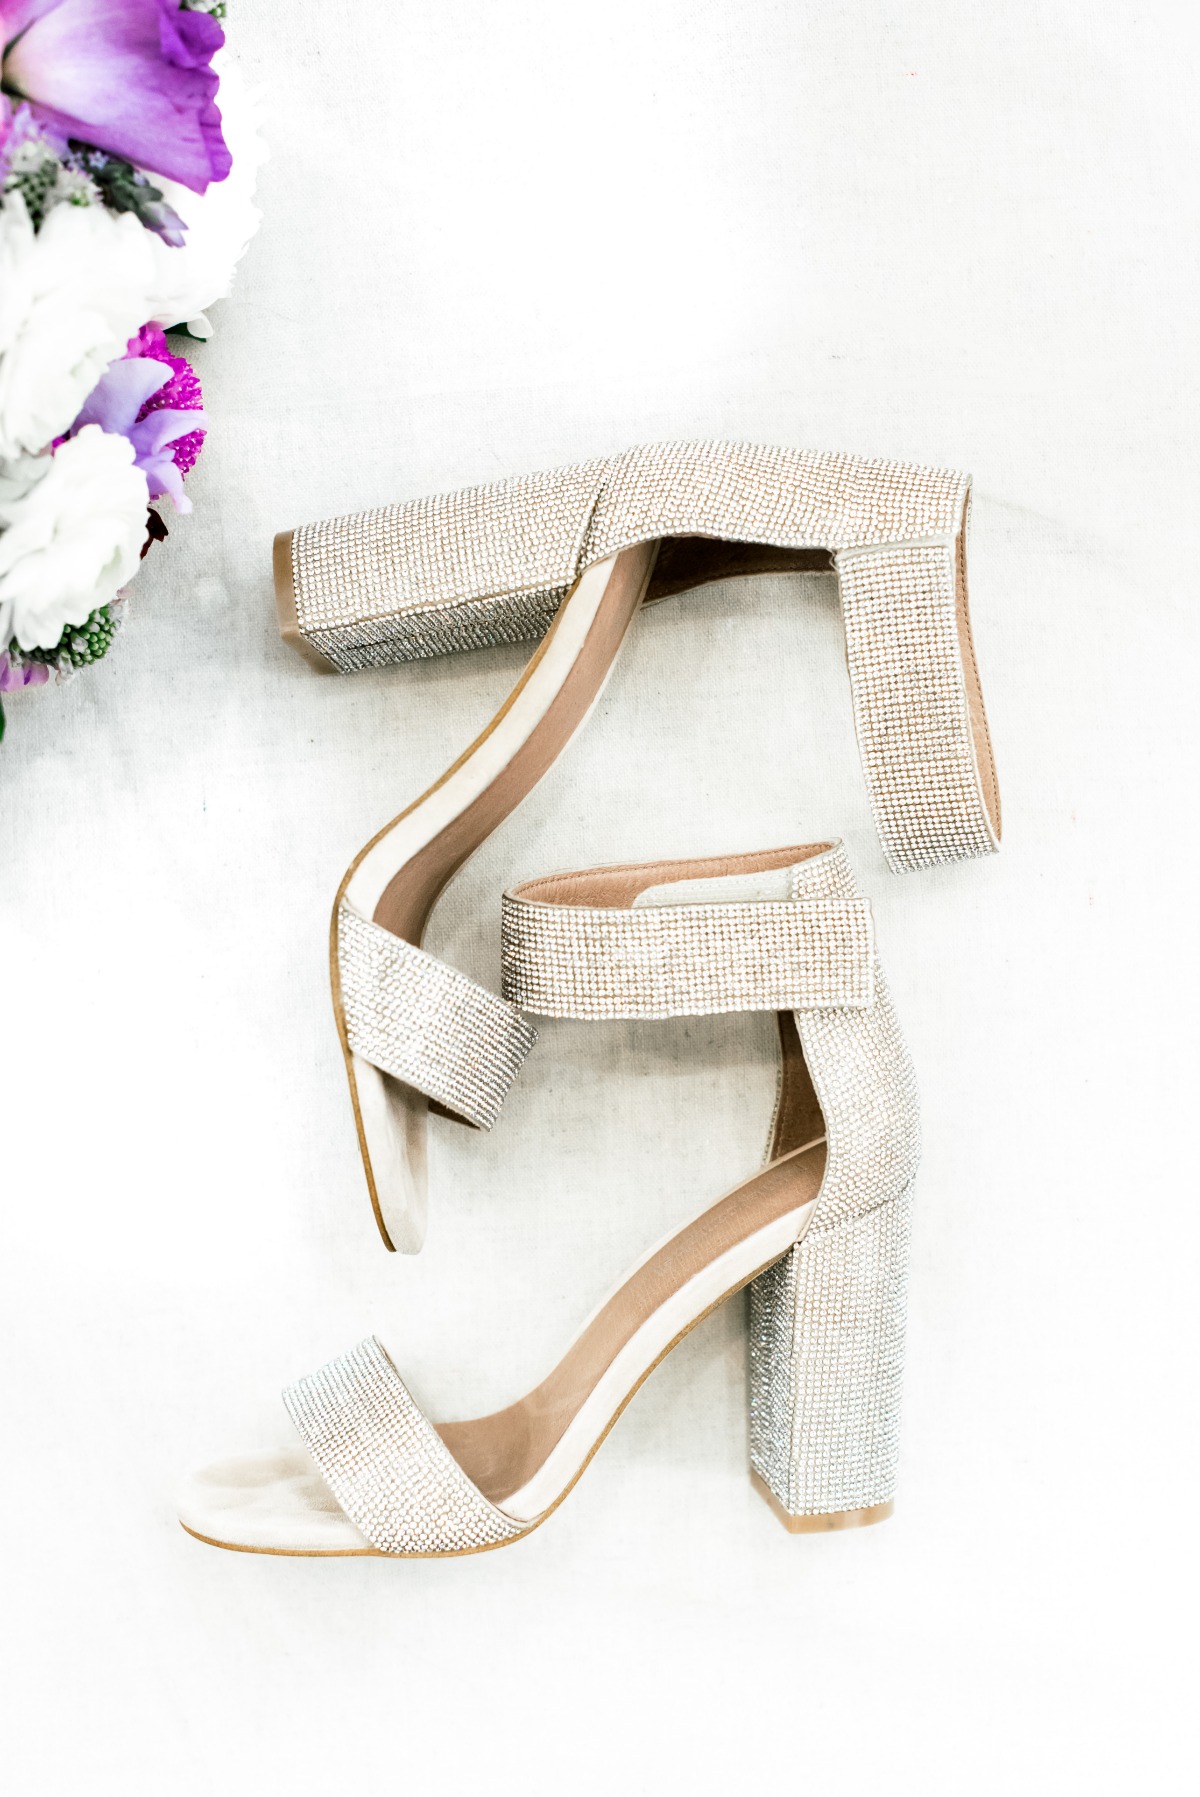 Studded wedding heels